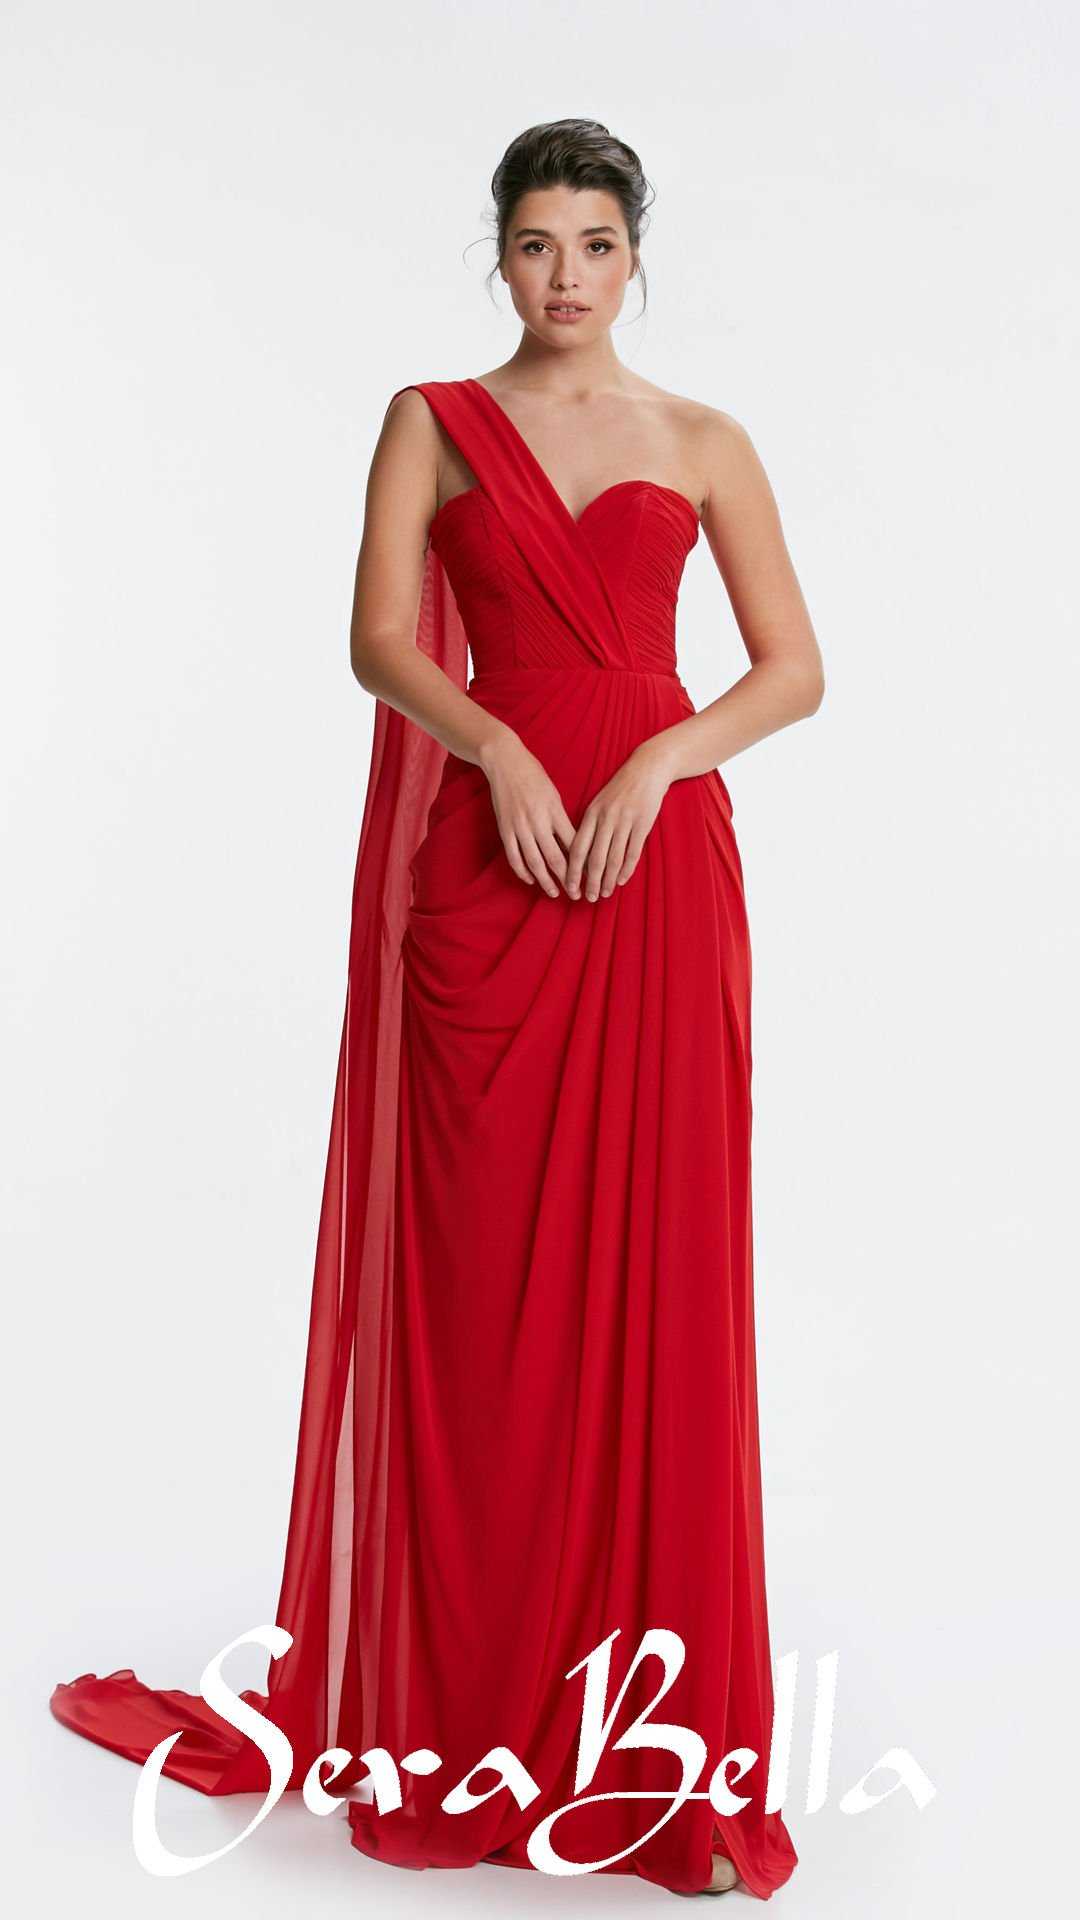 Frau mit elegantem rotem Kleid